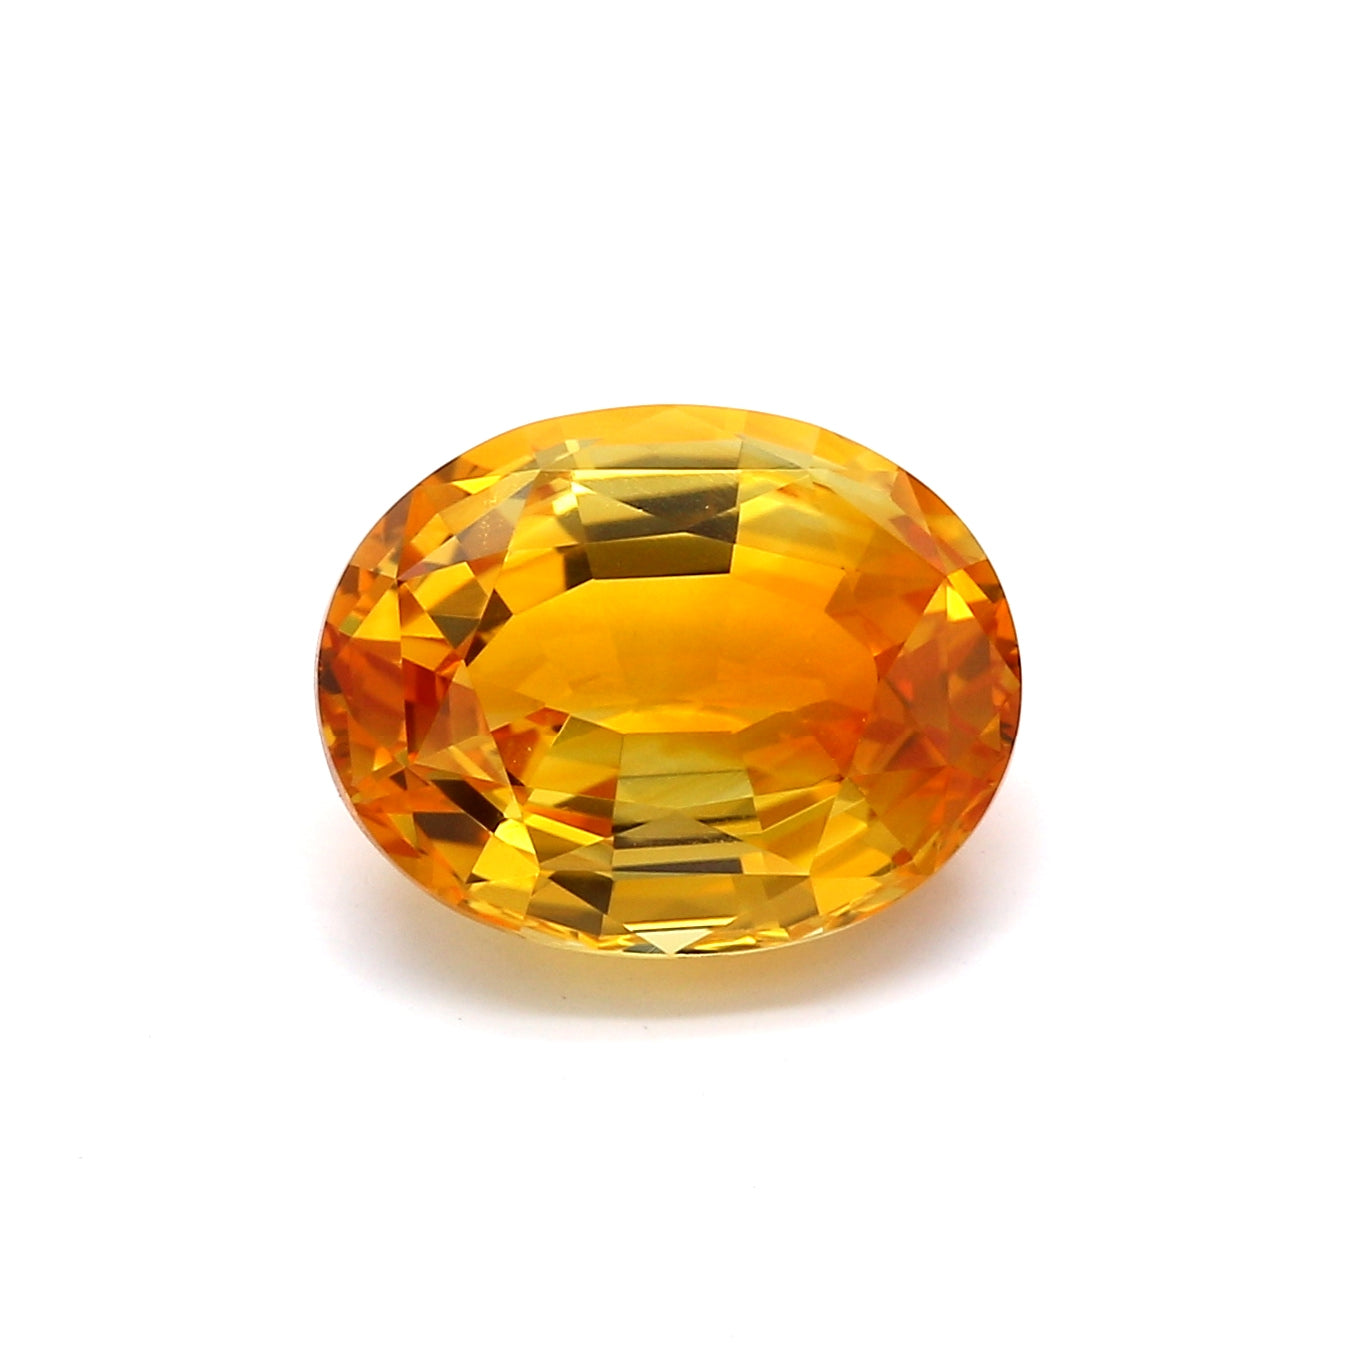 6.30ct Orangy Yellow, Oval Sapphire, Heated, Sri Lanka - 11.24 x 9.64 x 5.89mm